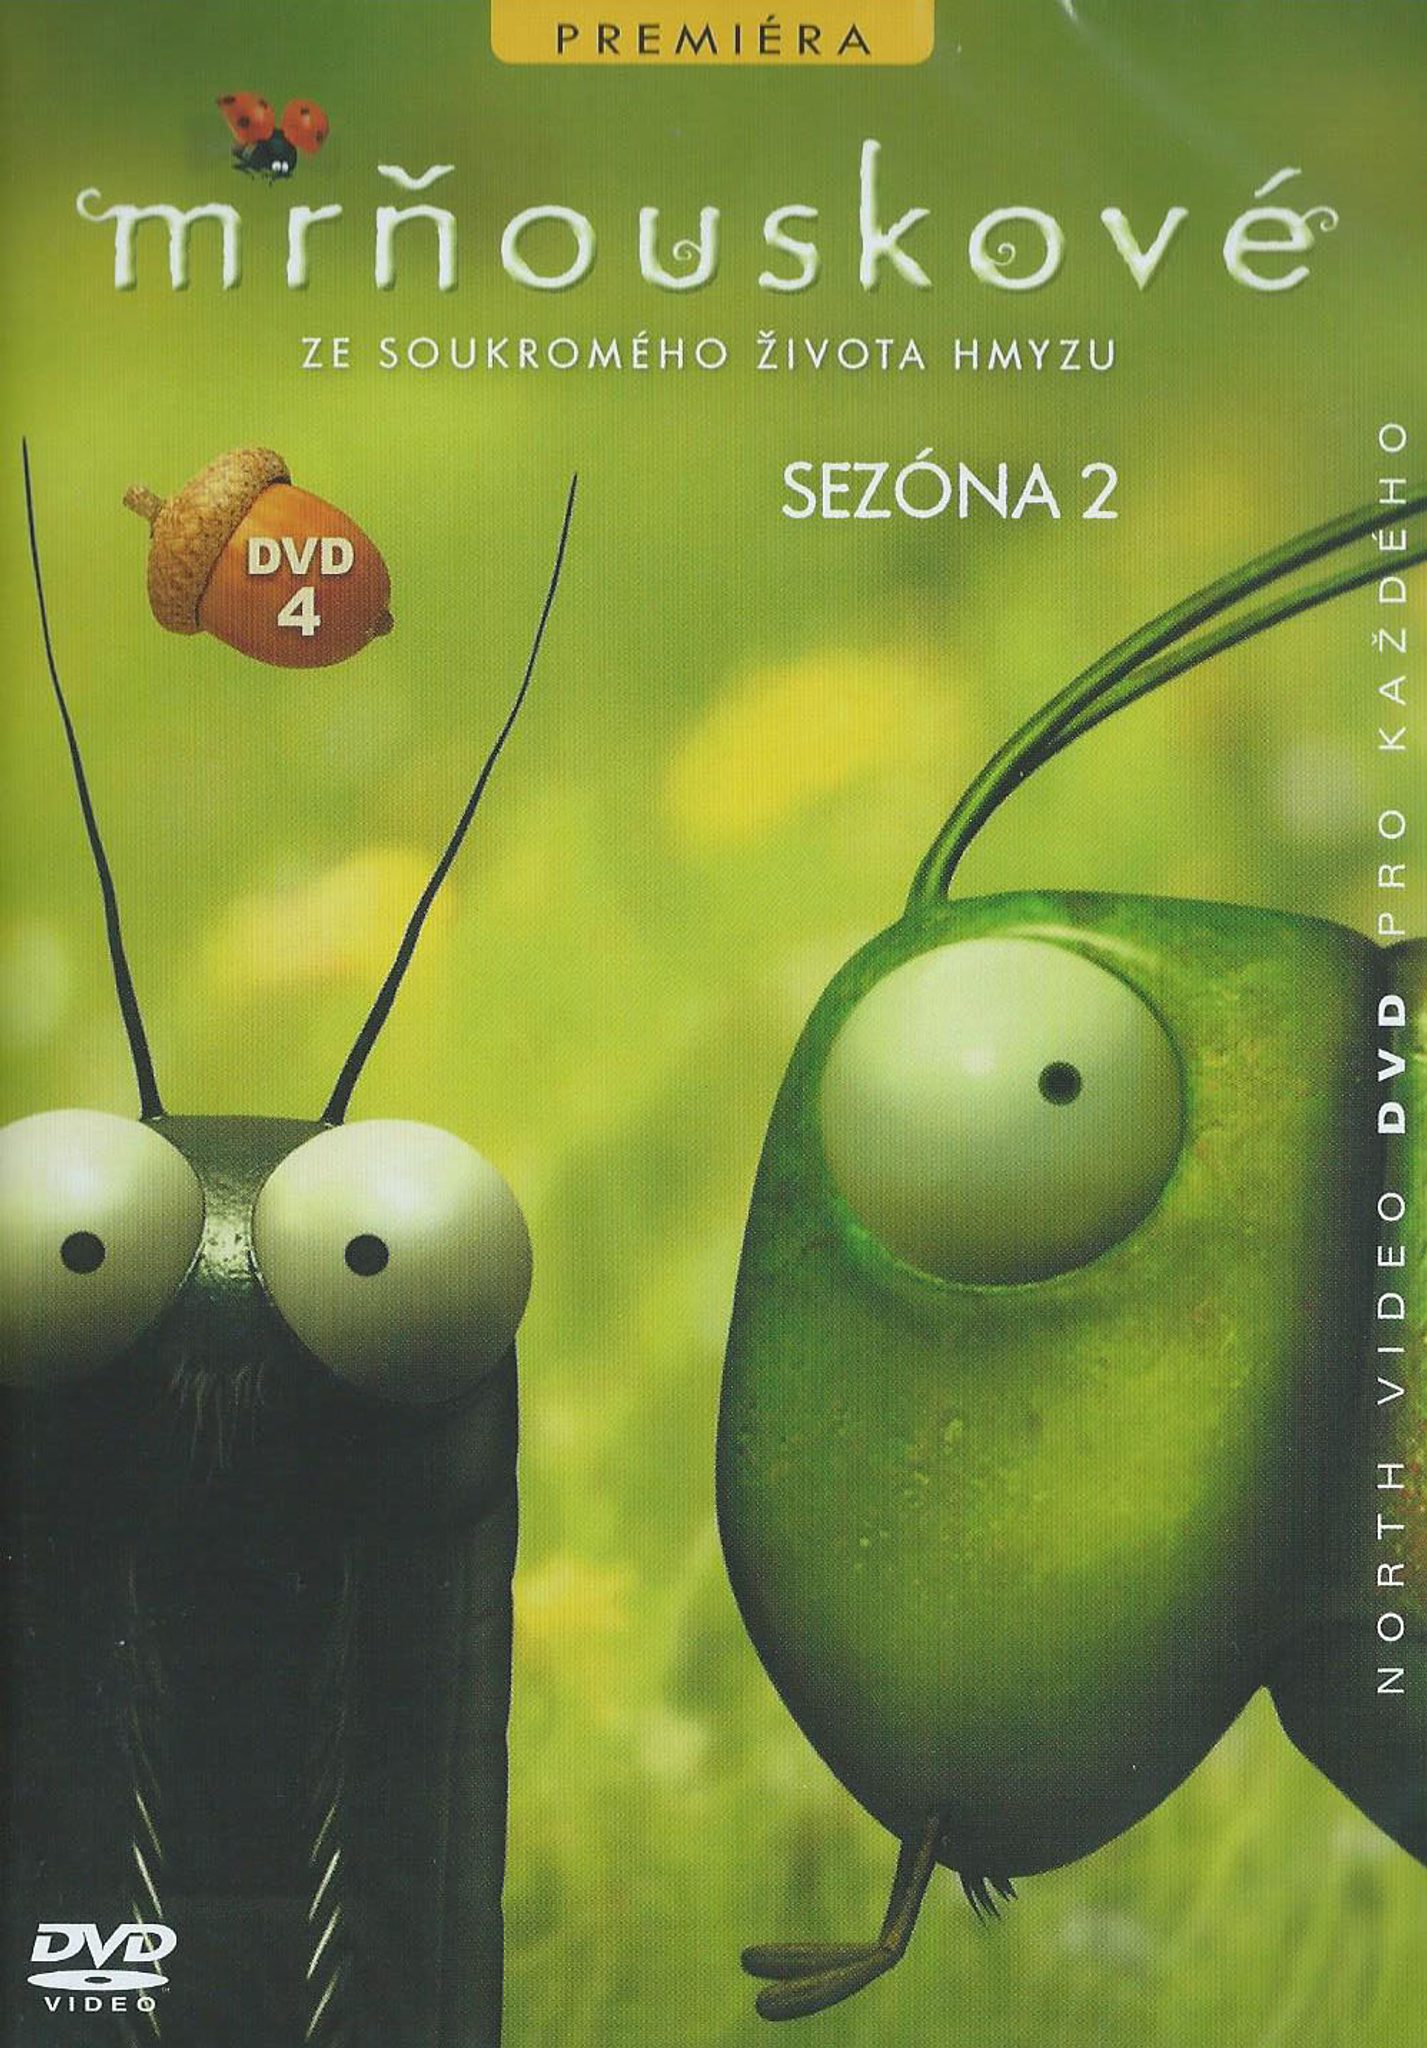 DVD Mrouskov 4